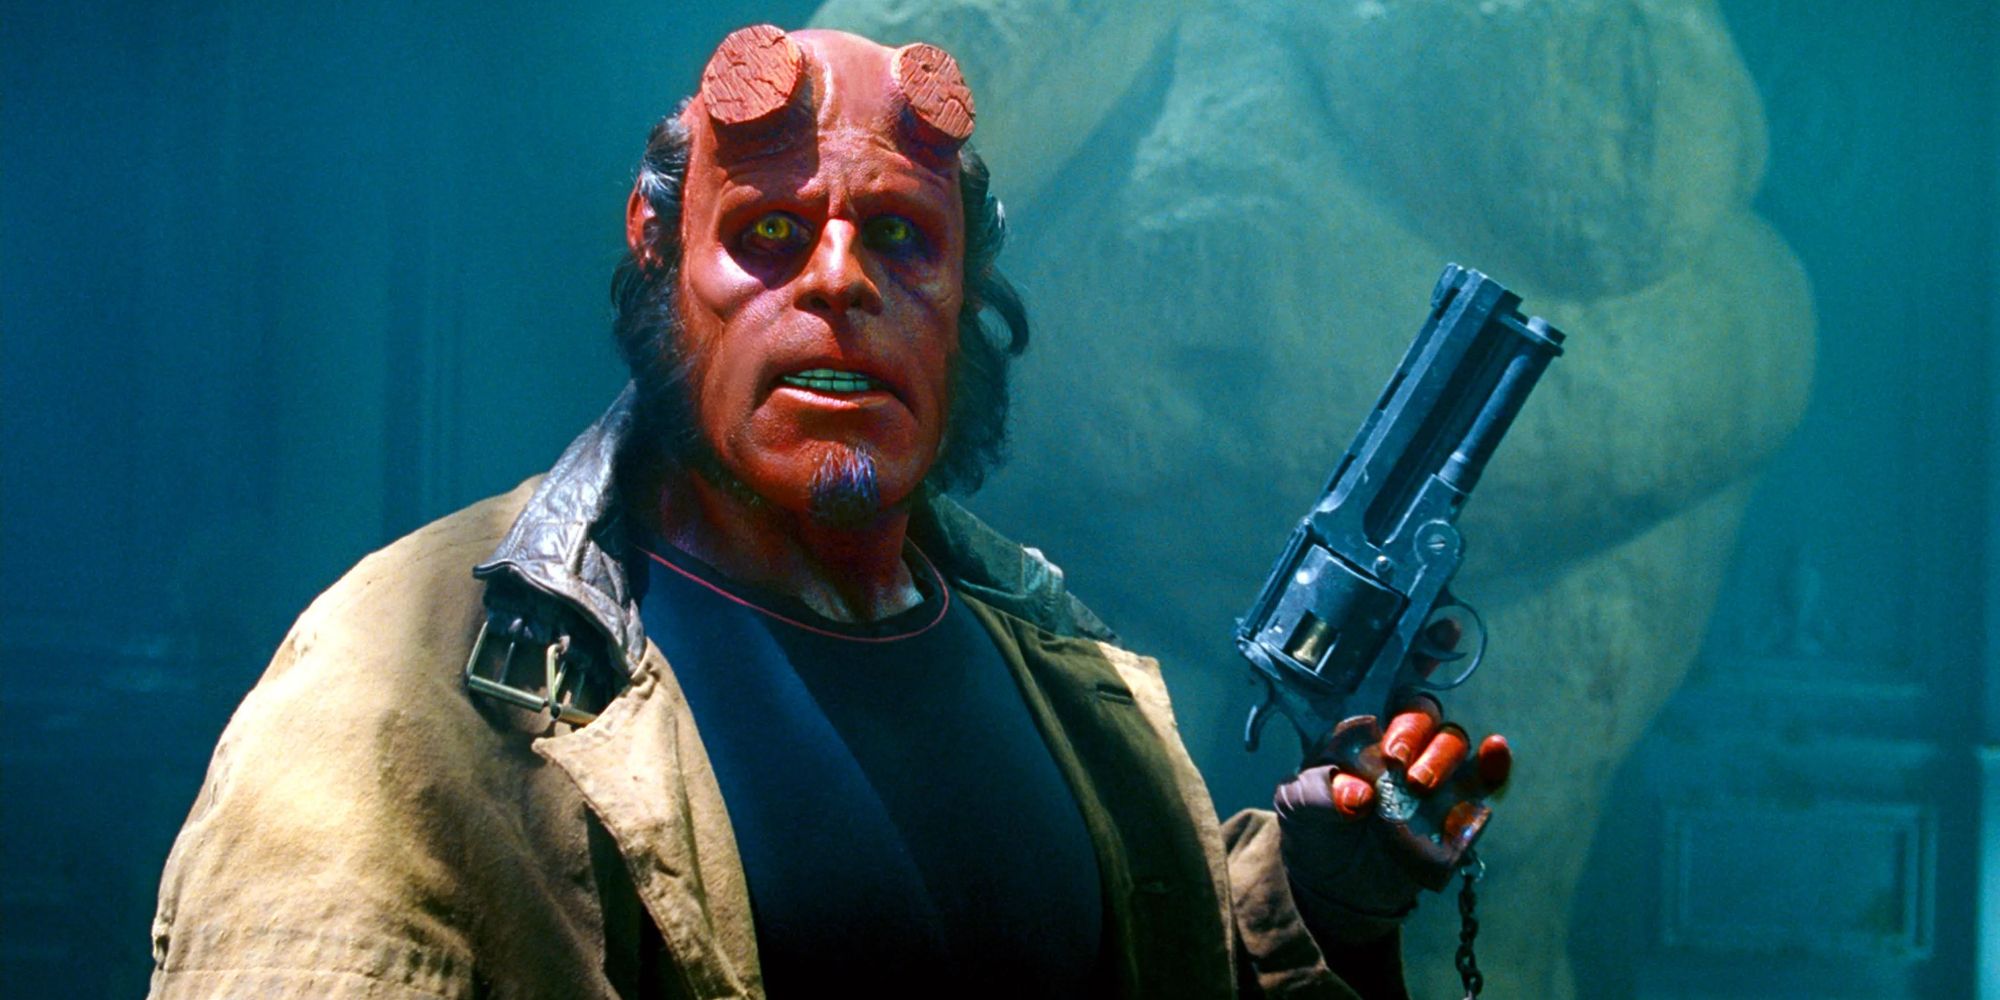 Perlman as Hellboy holding a gun